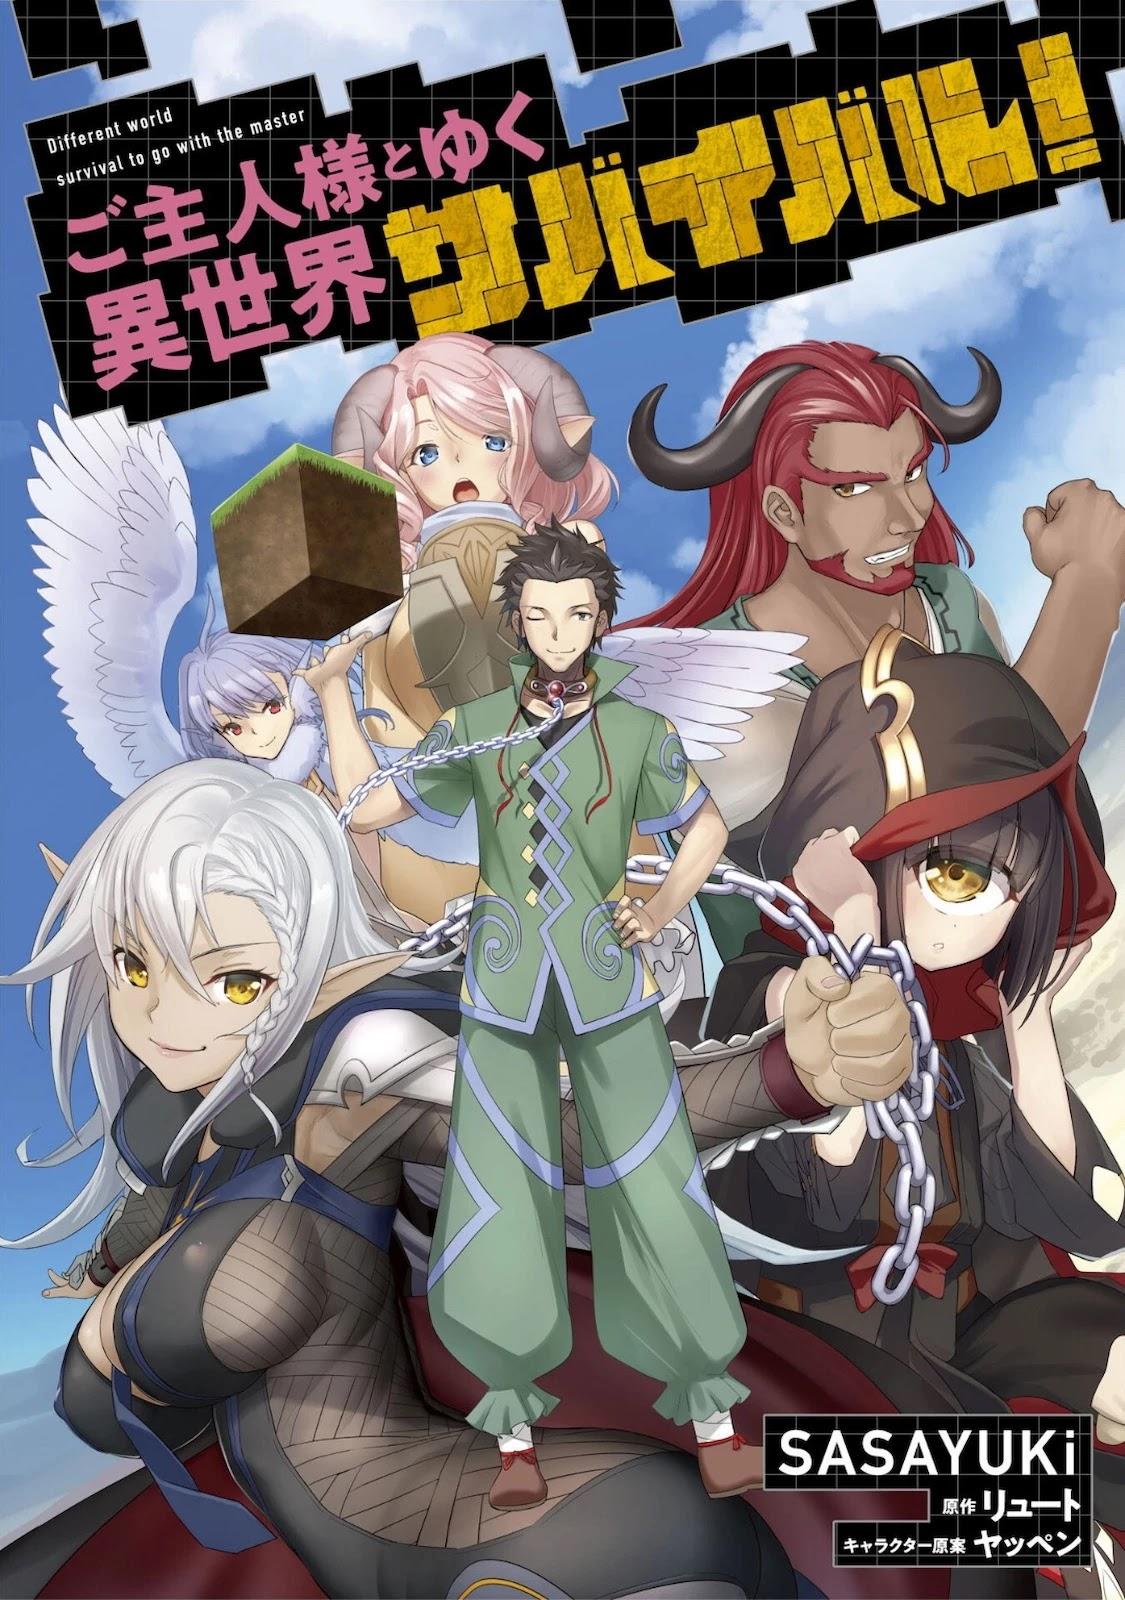 Read Craft Game No Nouryoku De Isekai Kouryaku!! Manga on Mangakakalot